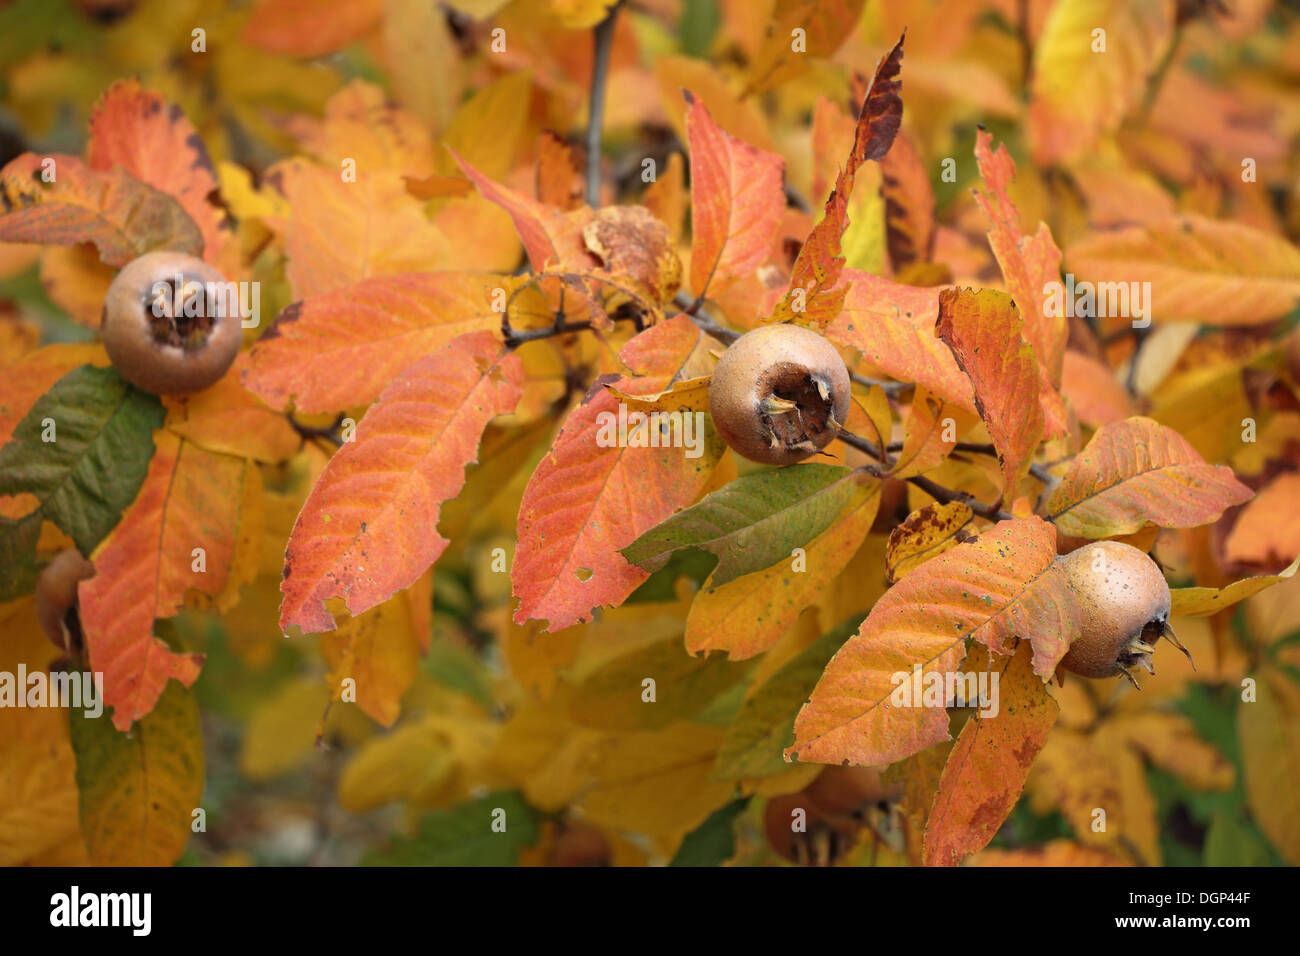 A medlar tree with ripe fruits in autumn Stock Photo